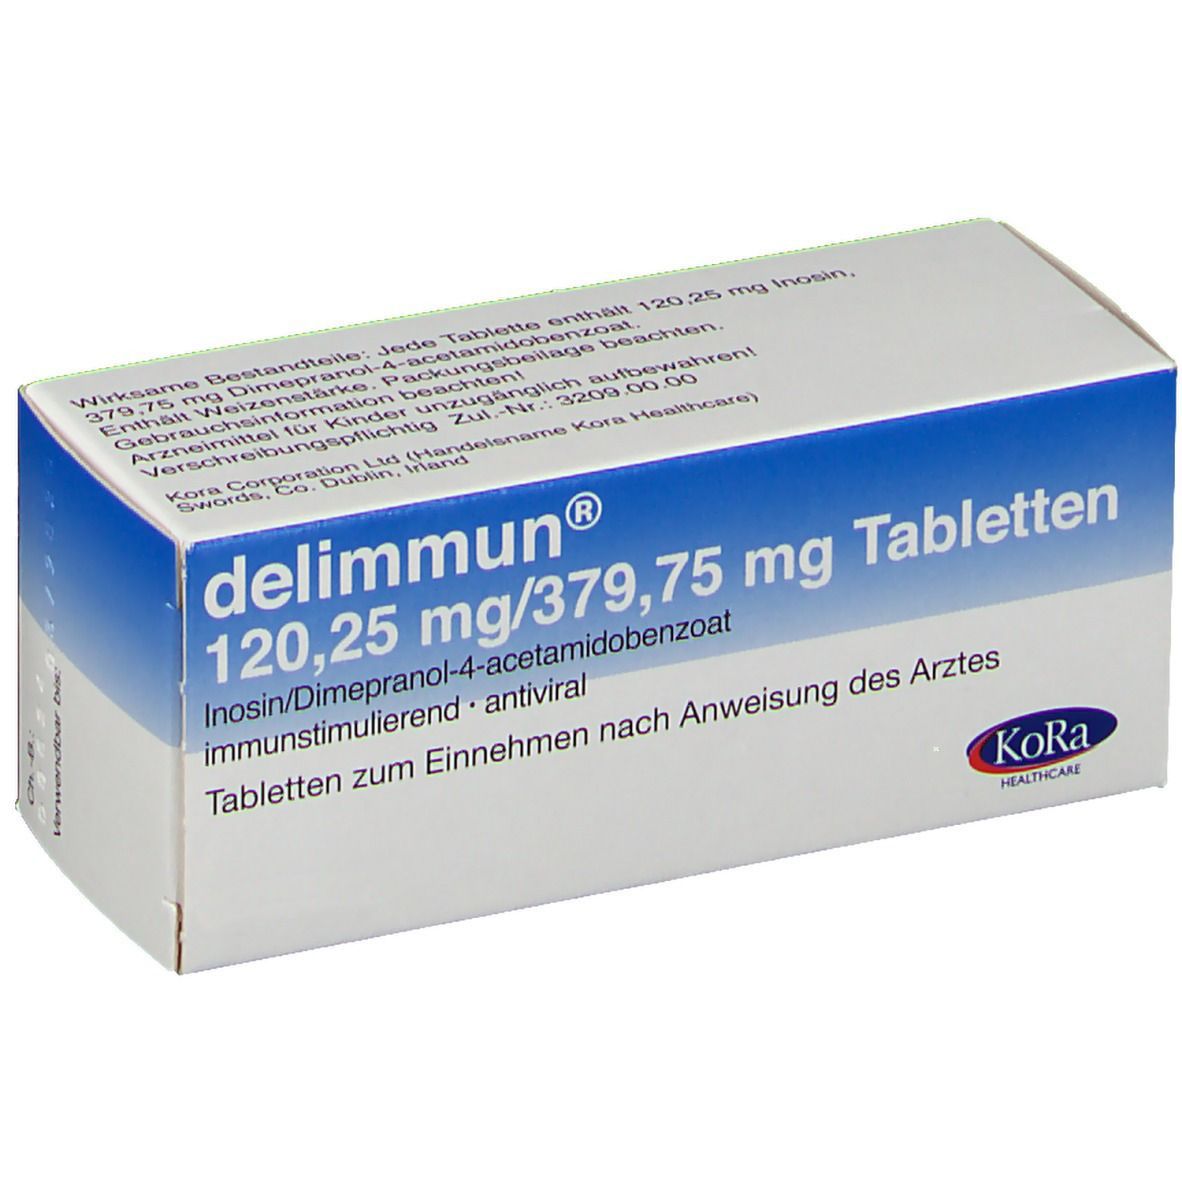 delimmun® 120,25 mg/379,75 mg